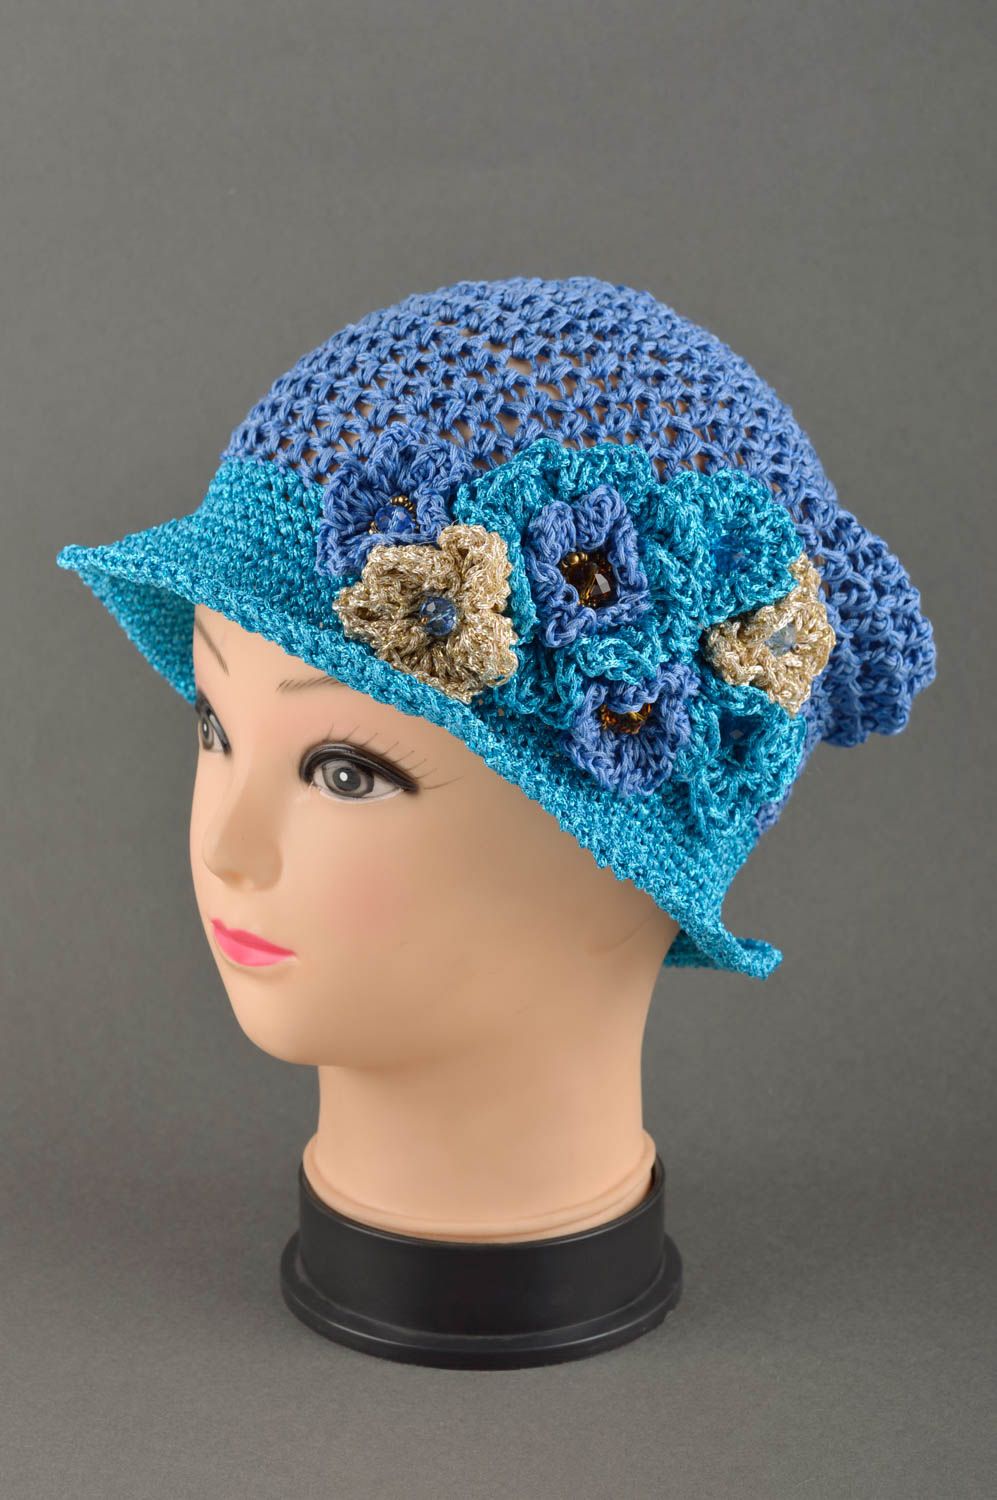 Handmade crochet hat summer hat ladies sun hats designer accessories gift ideas photo 1